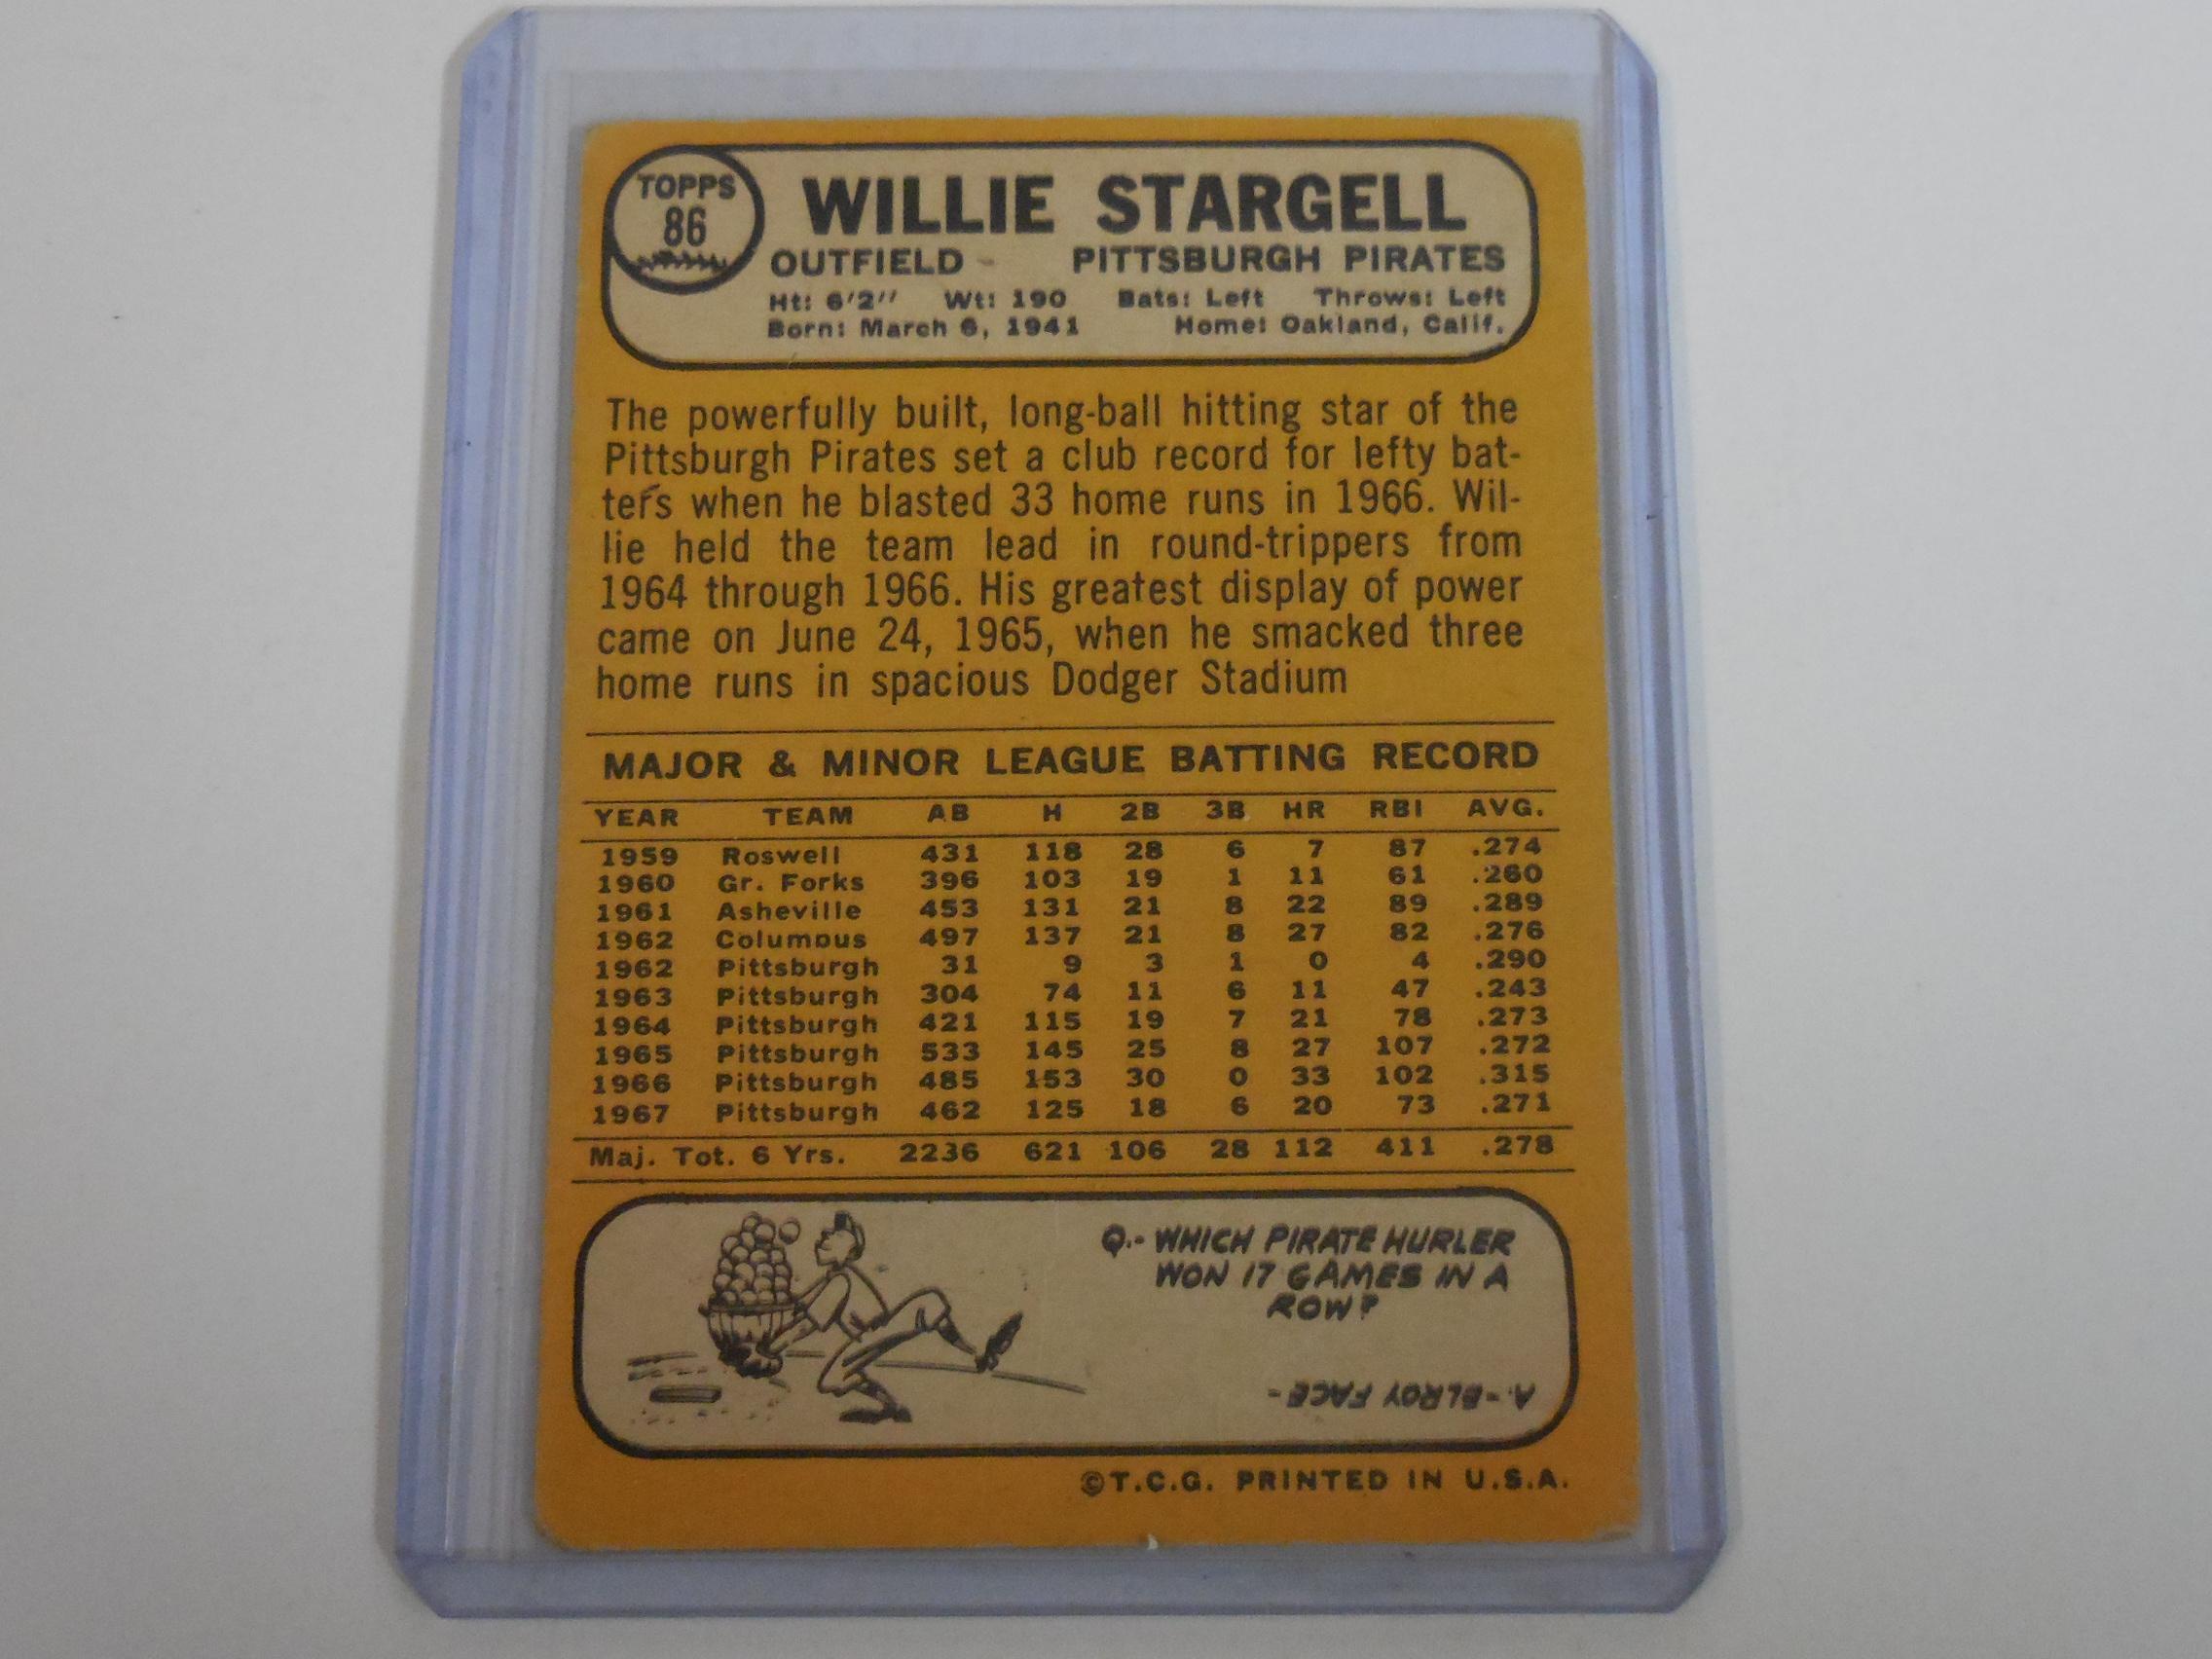 1968 TOPPS BASEBALL #86 WILLIE STARGELL PITTSBURGH PIRATES